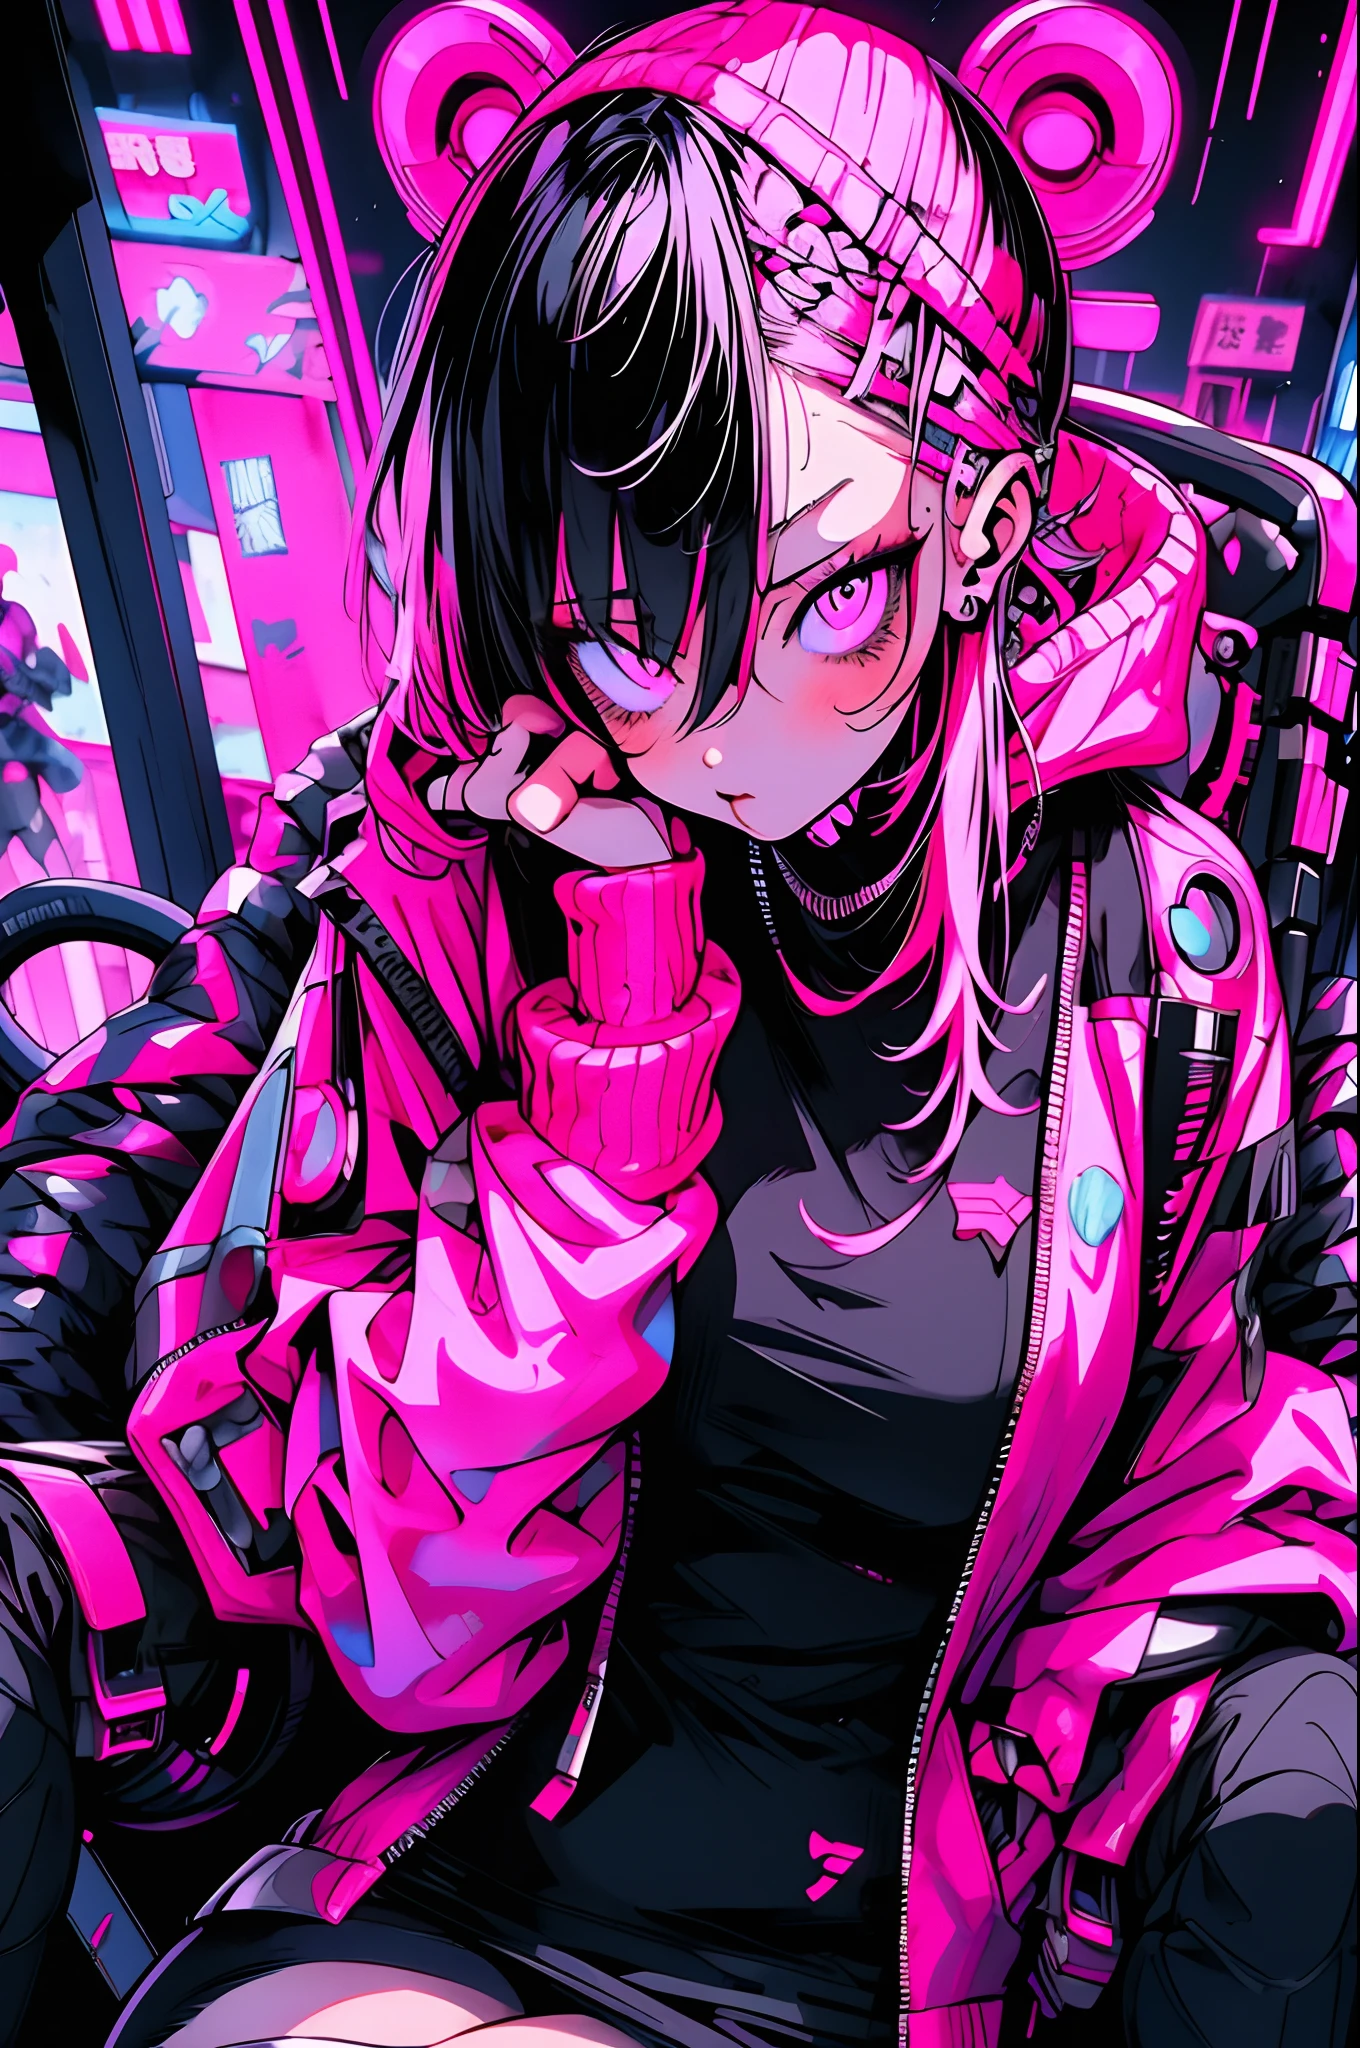 anime girl with pink hair sitting on a chair in a neon city, cyberpunk anime girl in hoodie, cyberpunk anime girl, anime style 4 k, anime cyberpunk art, best anime 4k konachan wallpaper, digital cyberpunk anime art, female cyberpunk anime girl, digital cyberpunk - anime art, cyberpunk anime art, anime cyberpunk, cyberpunk streetwear, cyberpunk art style